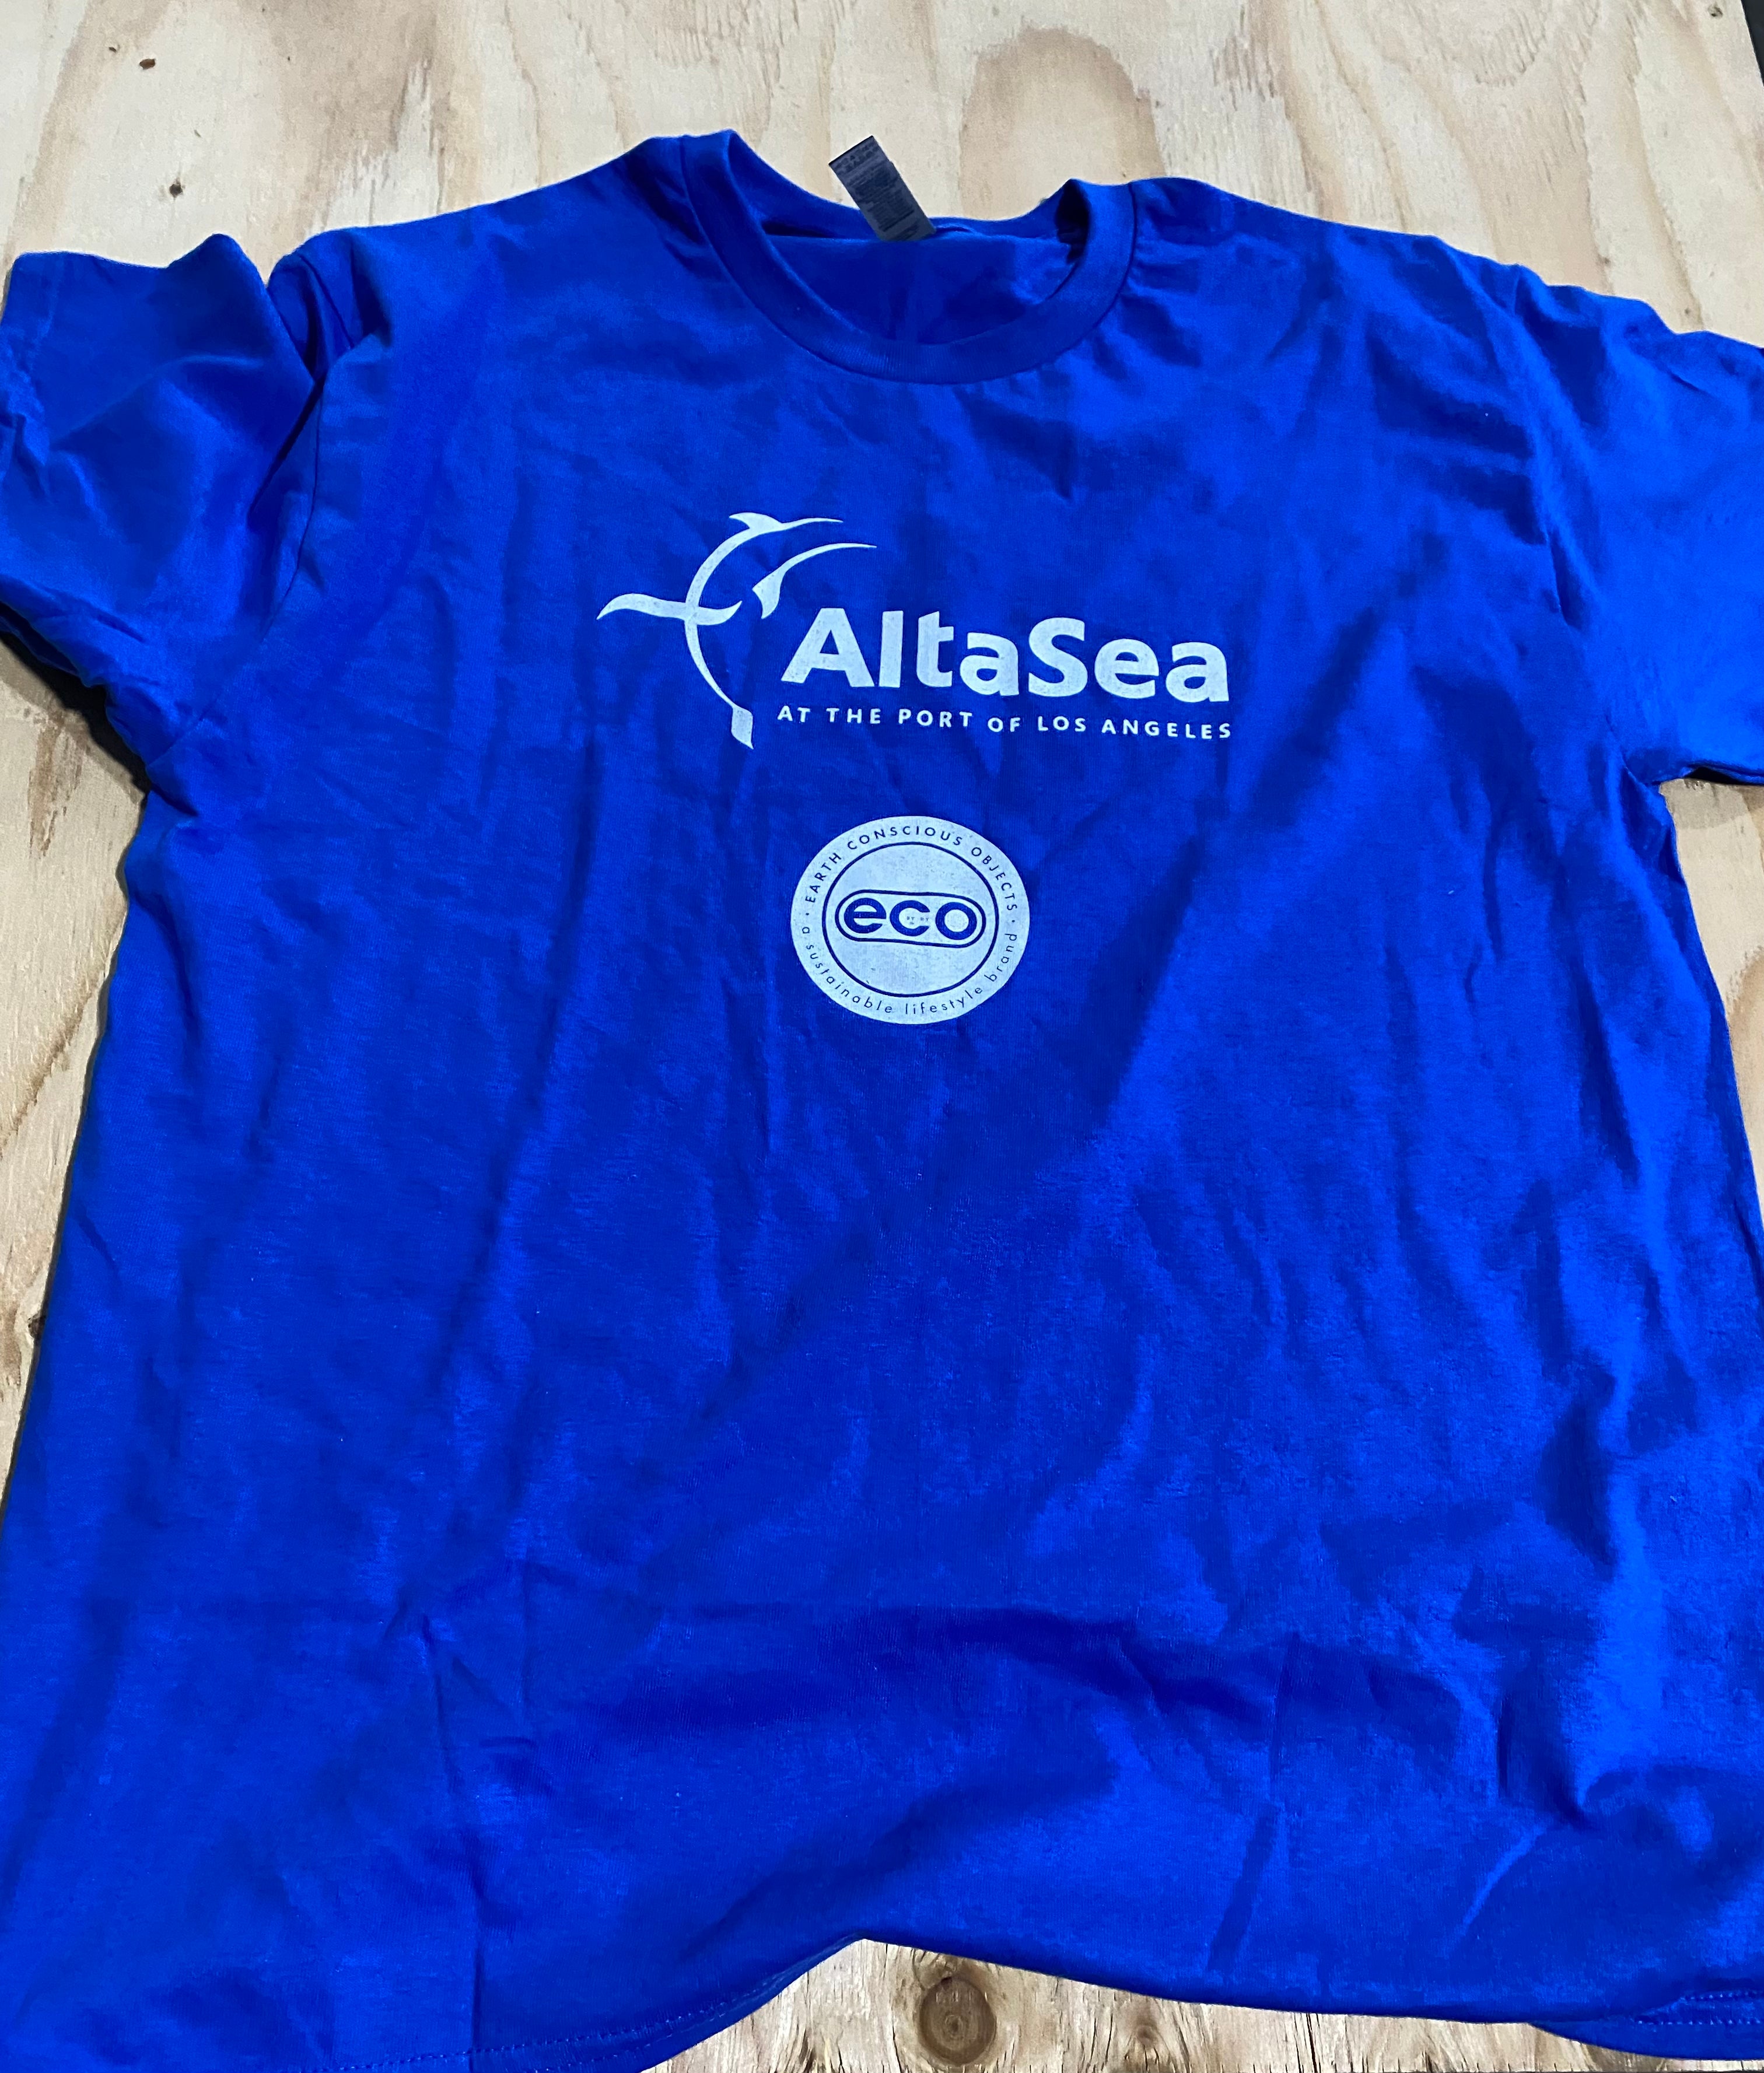 The AltaSea Casual Tshirt